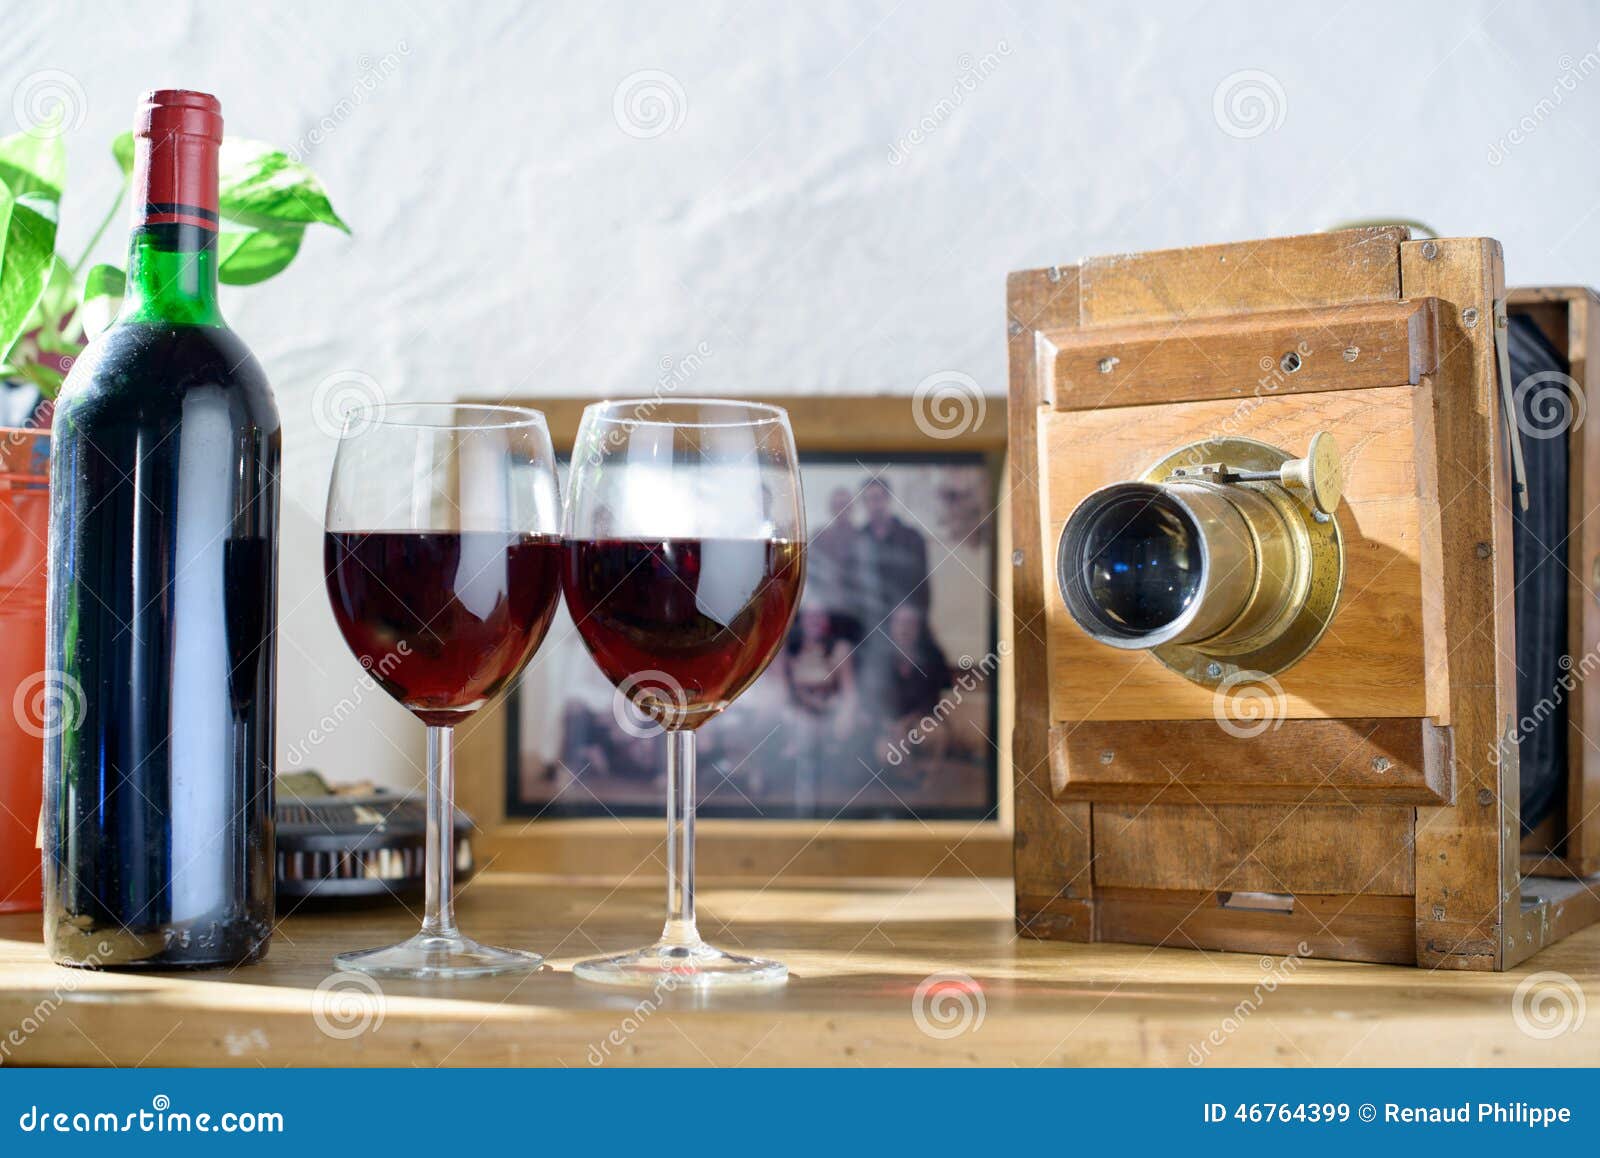 Vidrios De Vino Con Cámara Vieja Imagen de archivo Imagen de cena, viejo: 46764399